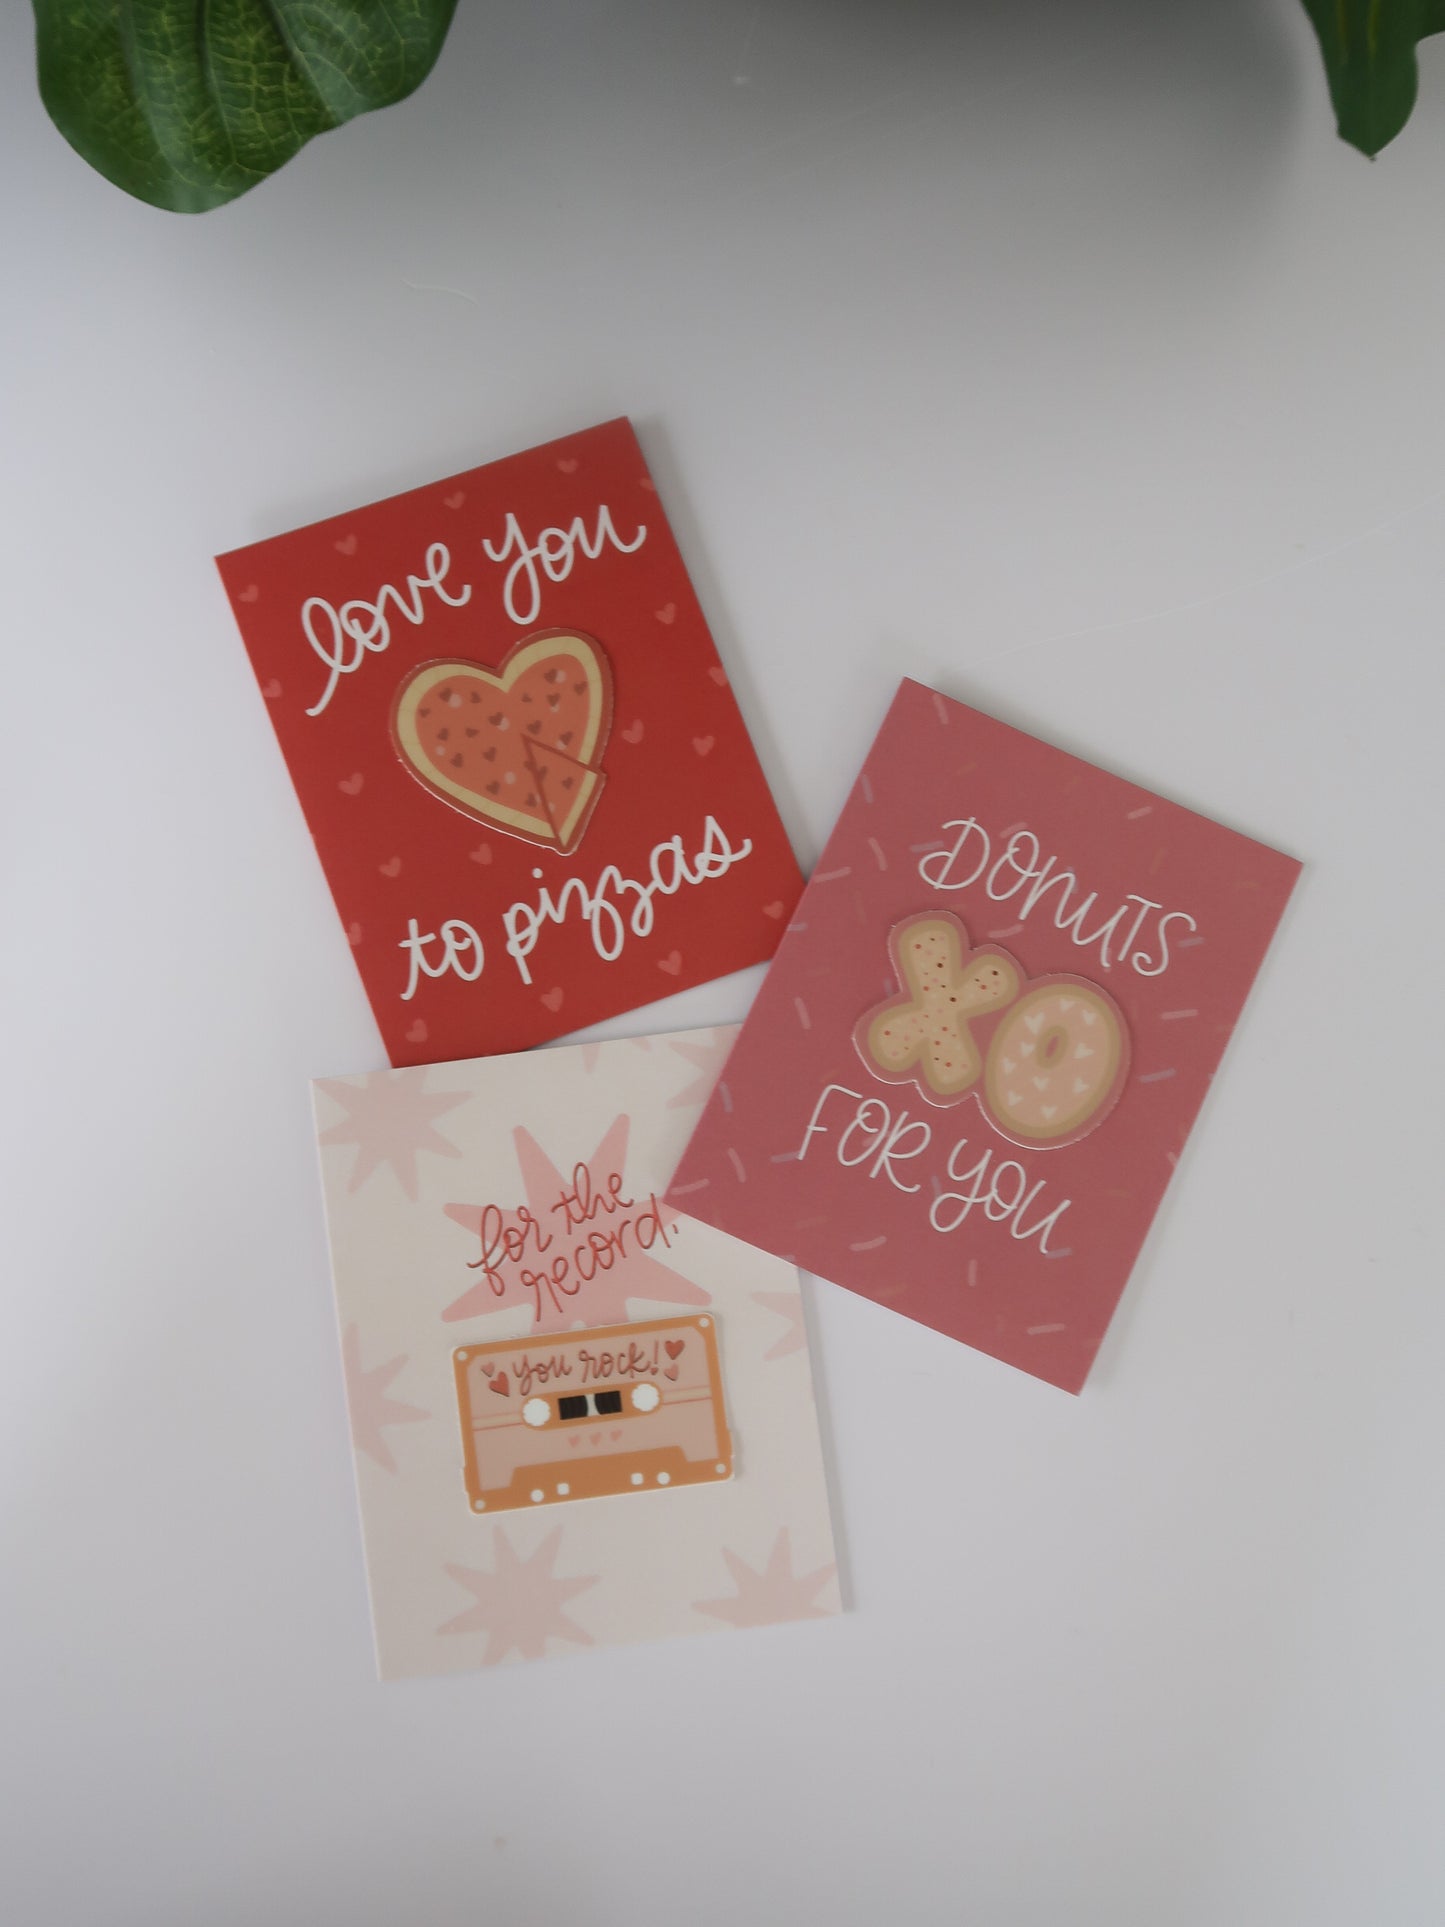 Love You To Pizzas Valentine Sticker Card